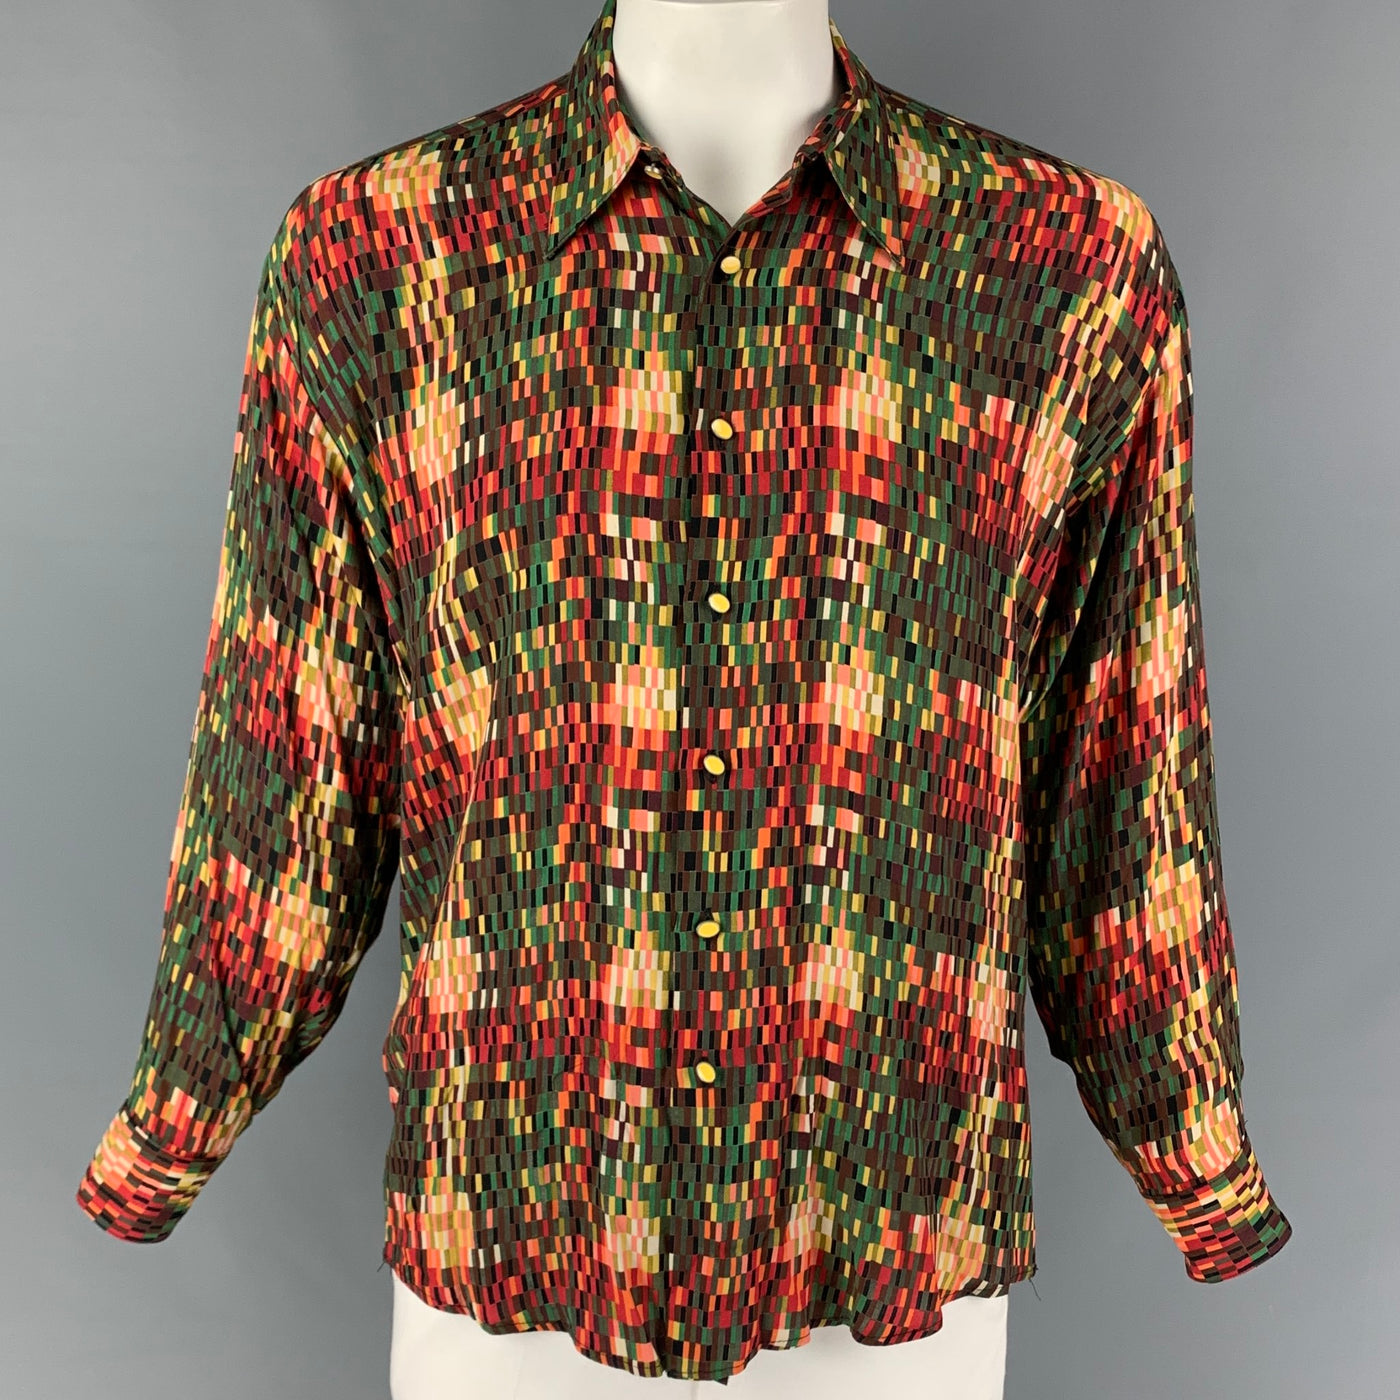 Vintage Men's Shirt - Multi - M